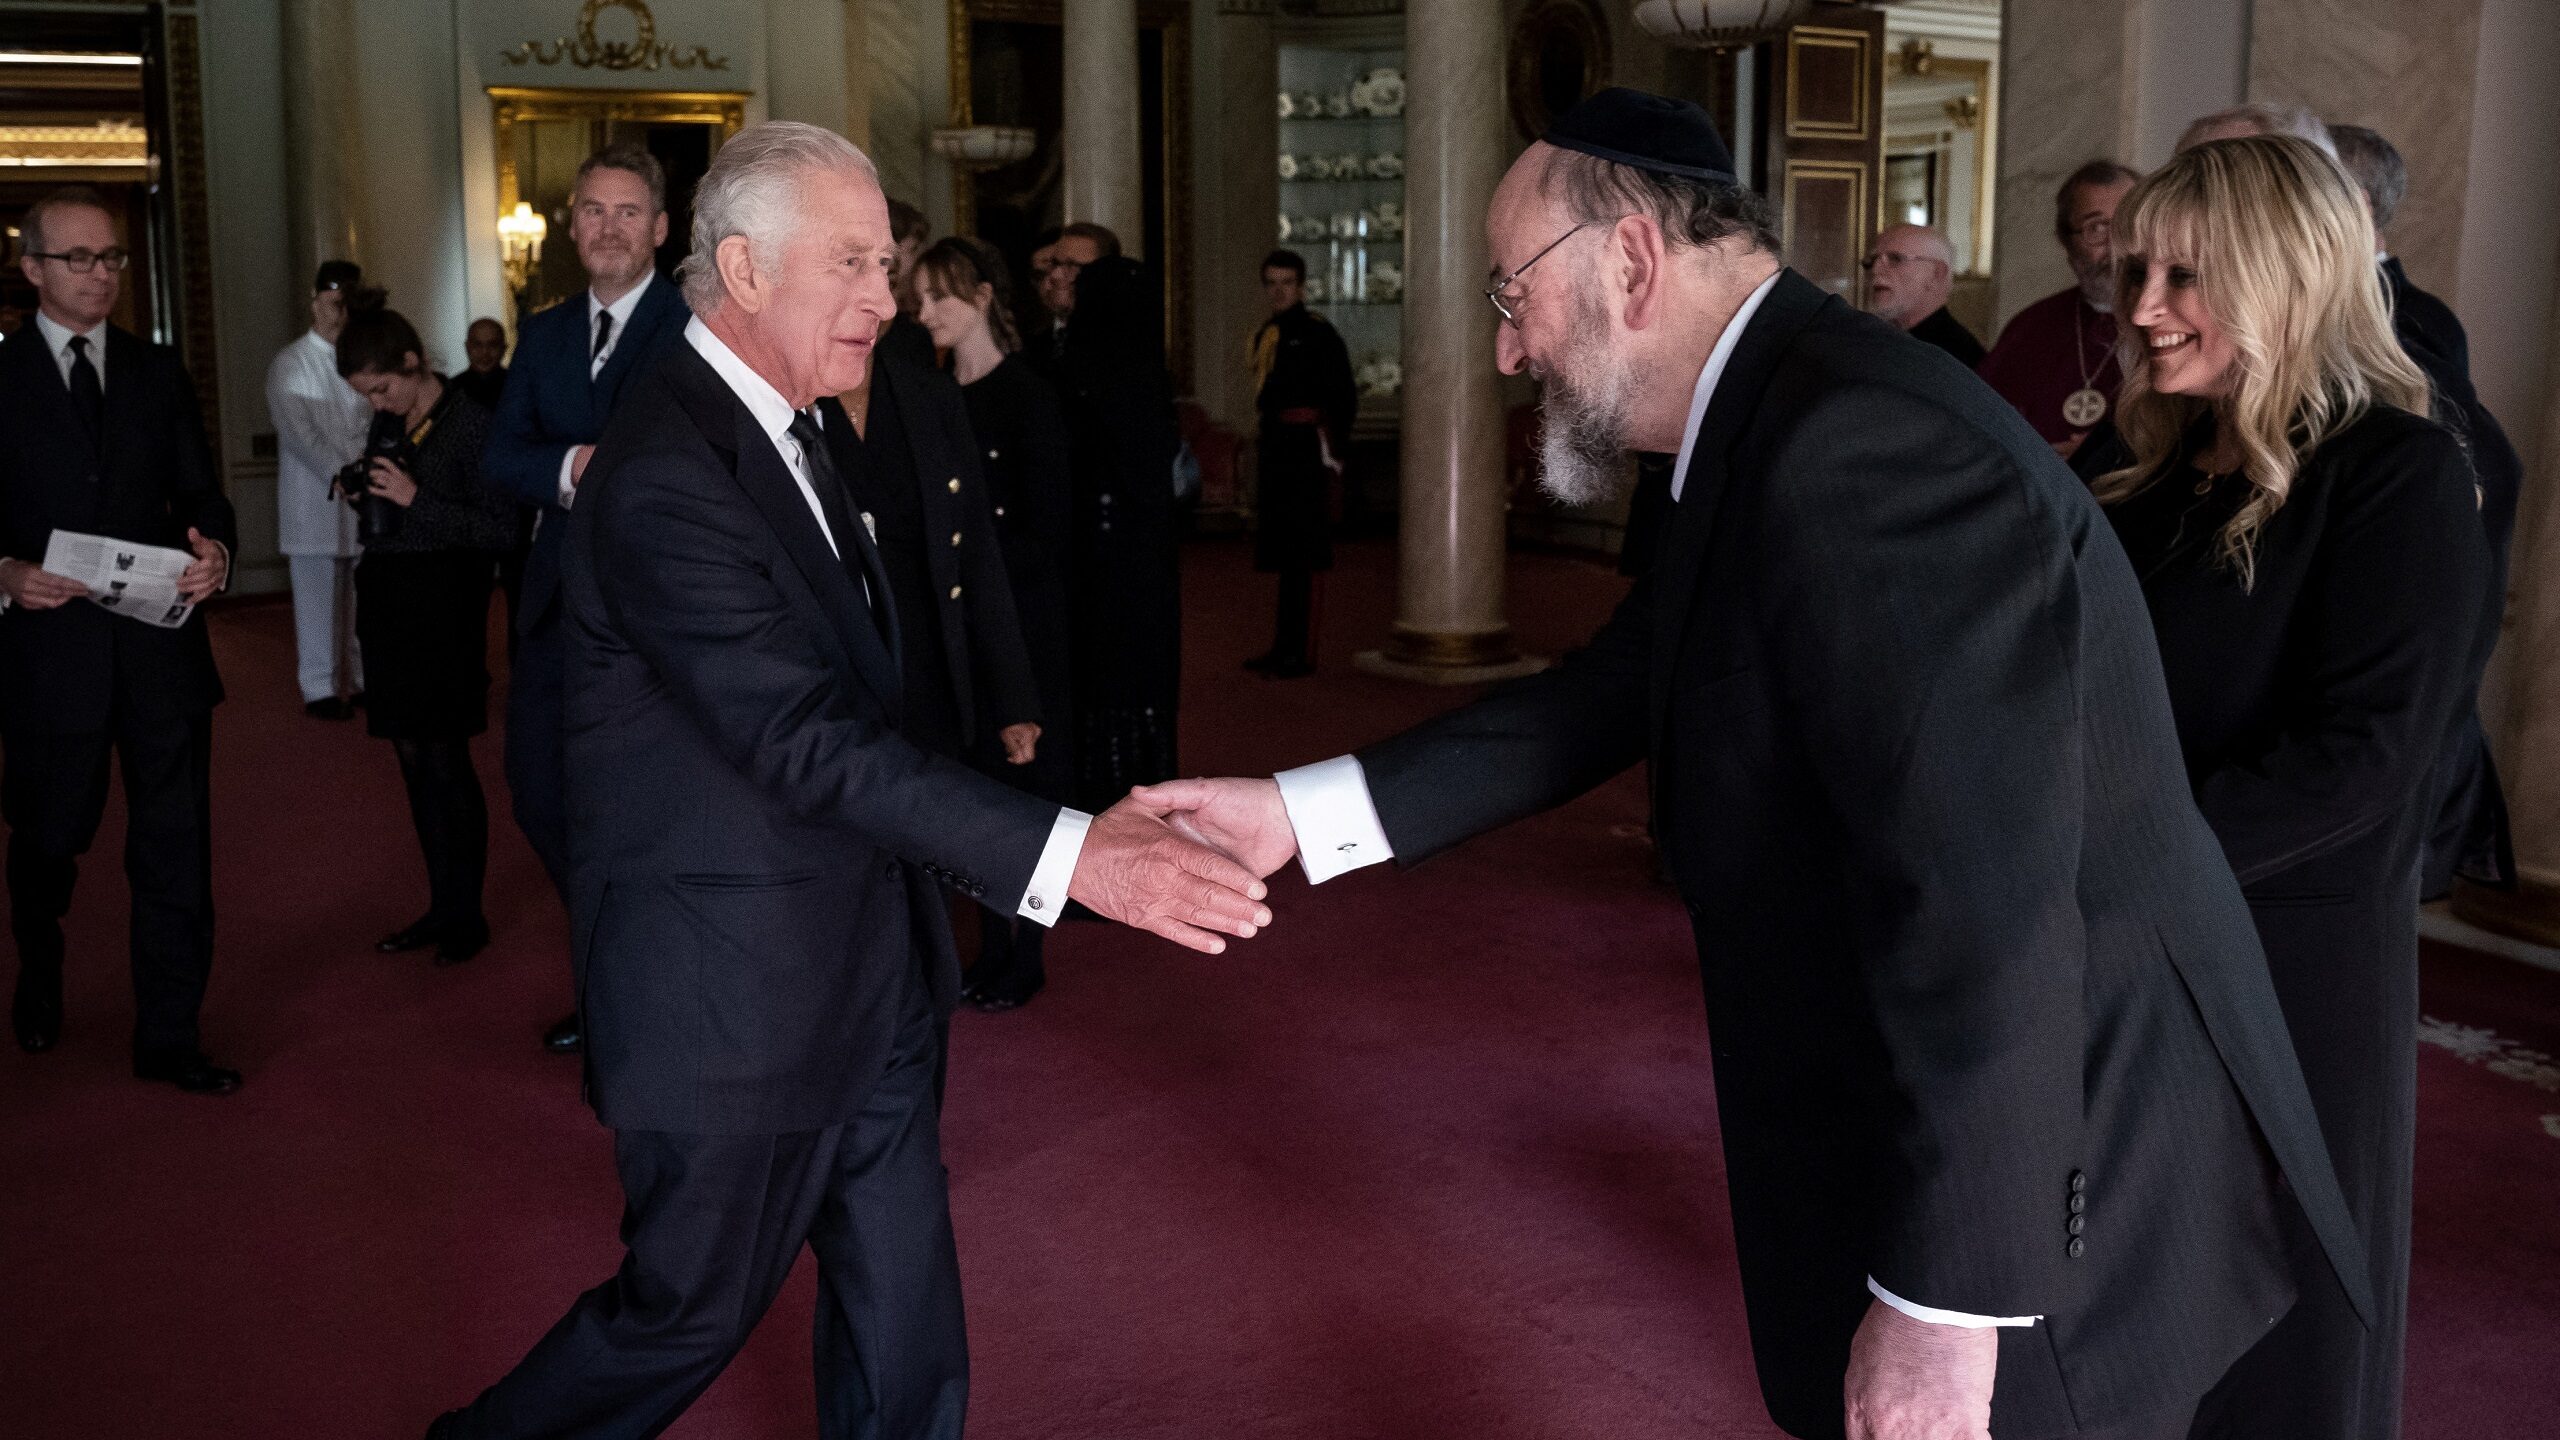 Israelis Reflect on King Charles’ Ties to Jewish People Ahead of Possible Visit